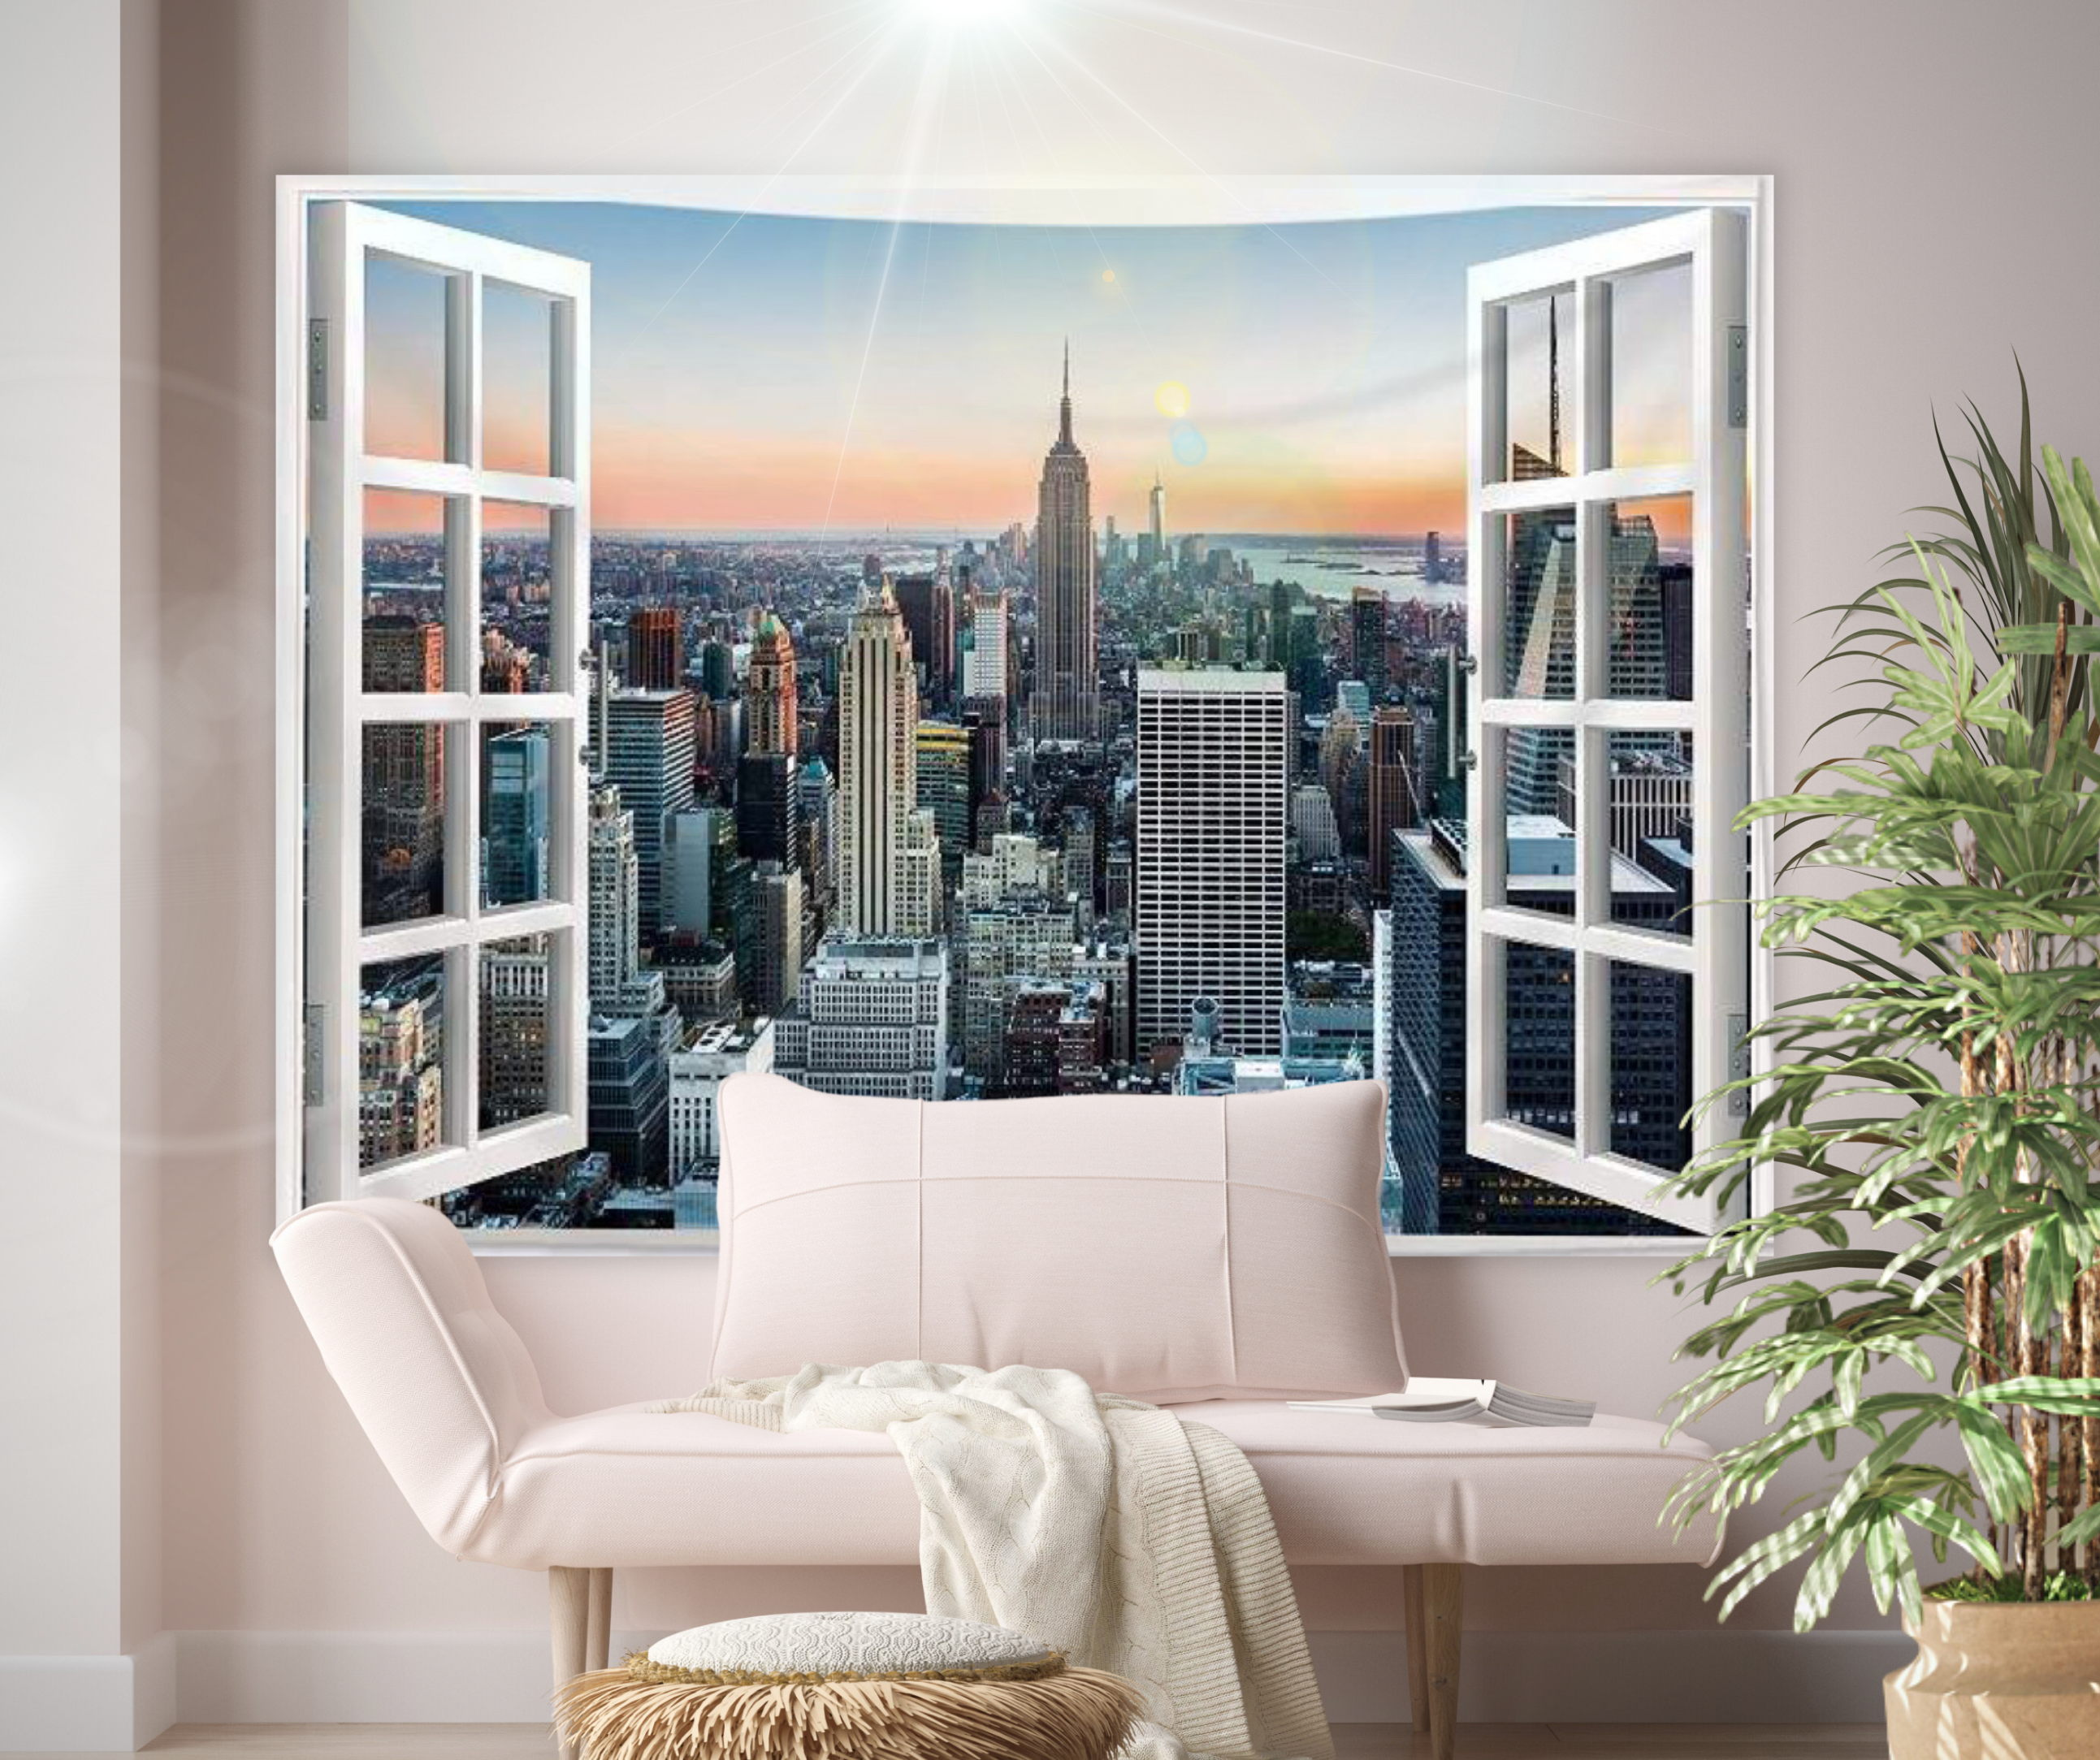 KaiSha Tapestry Wall Hanging; City Skyline Art Home Décor; Cityscape New York Backdrop Tall Buildings Artwork